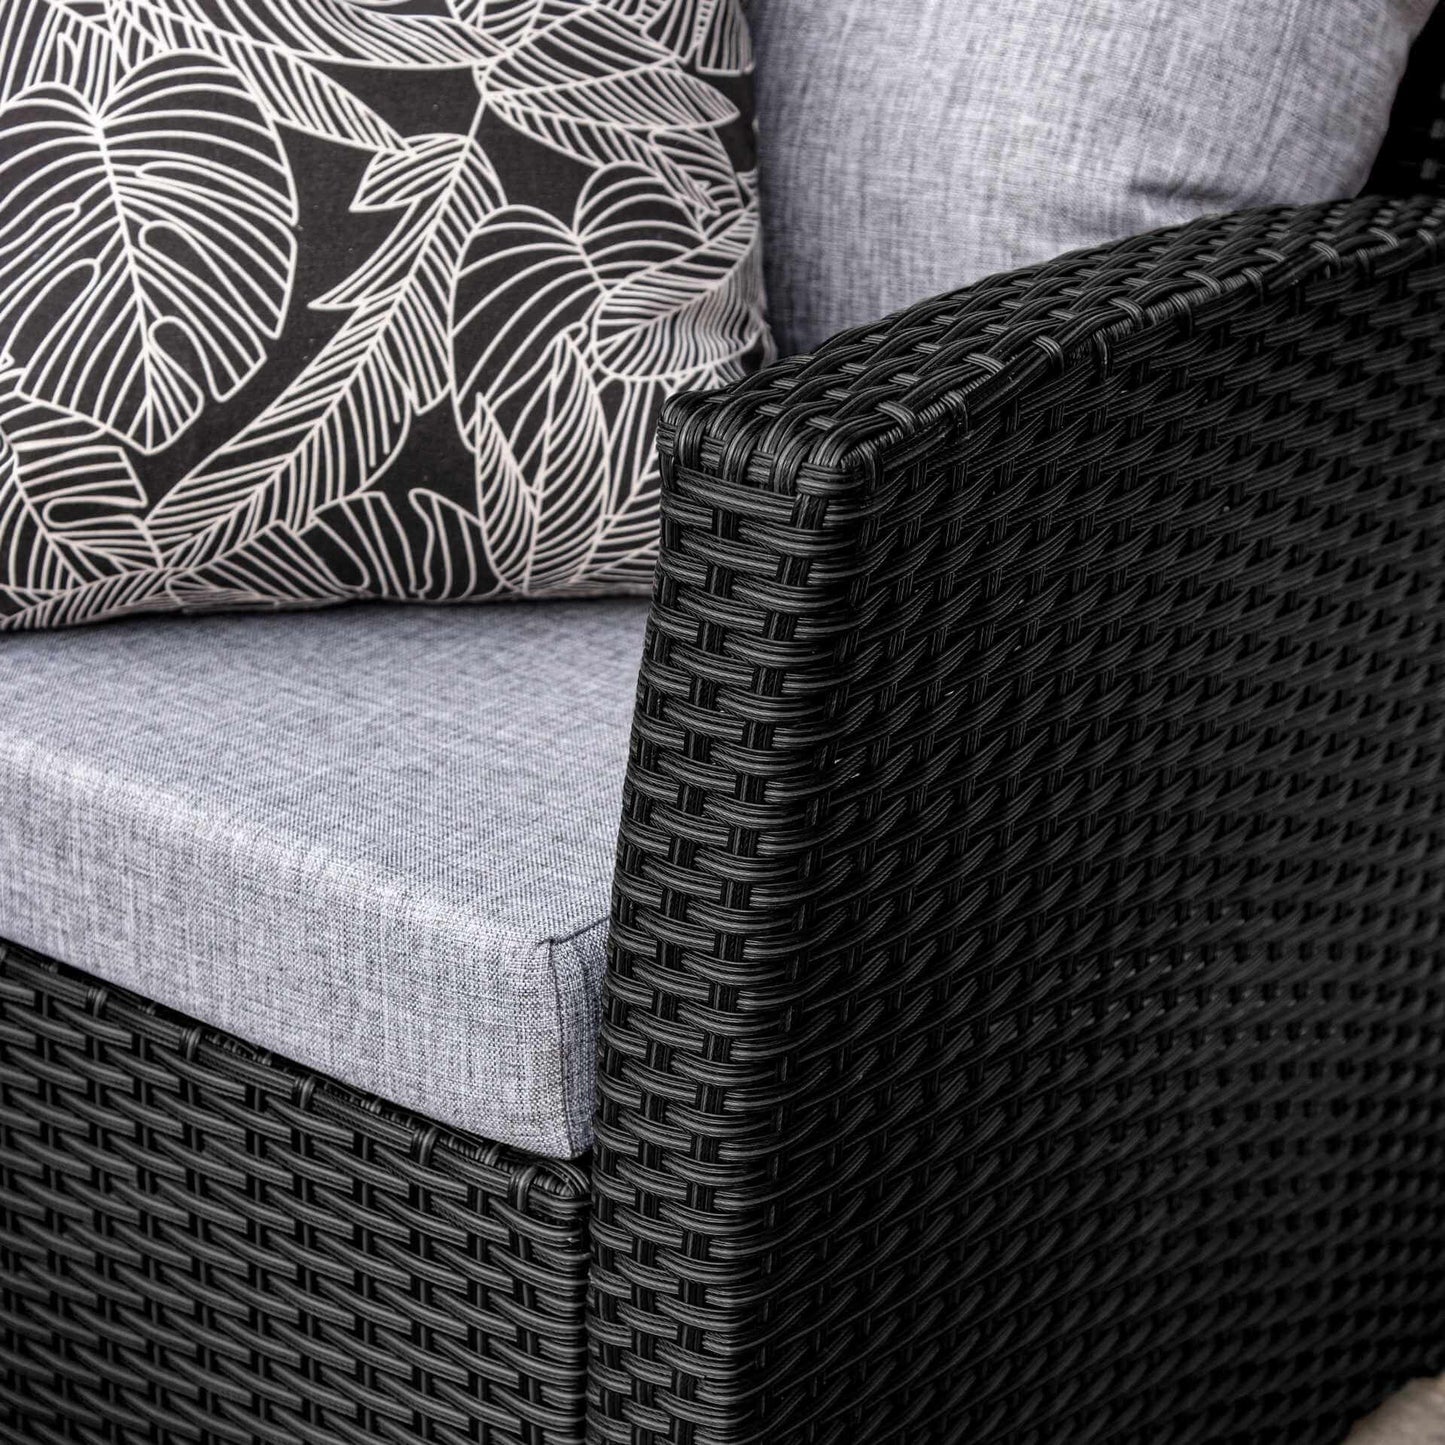 Cote garden sofa set - LED cantilever parasol - 4 seater - black rattan